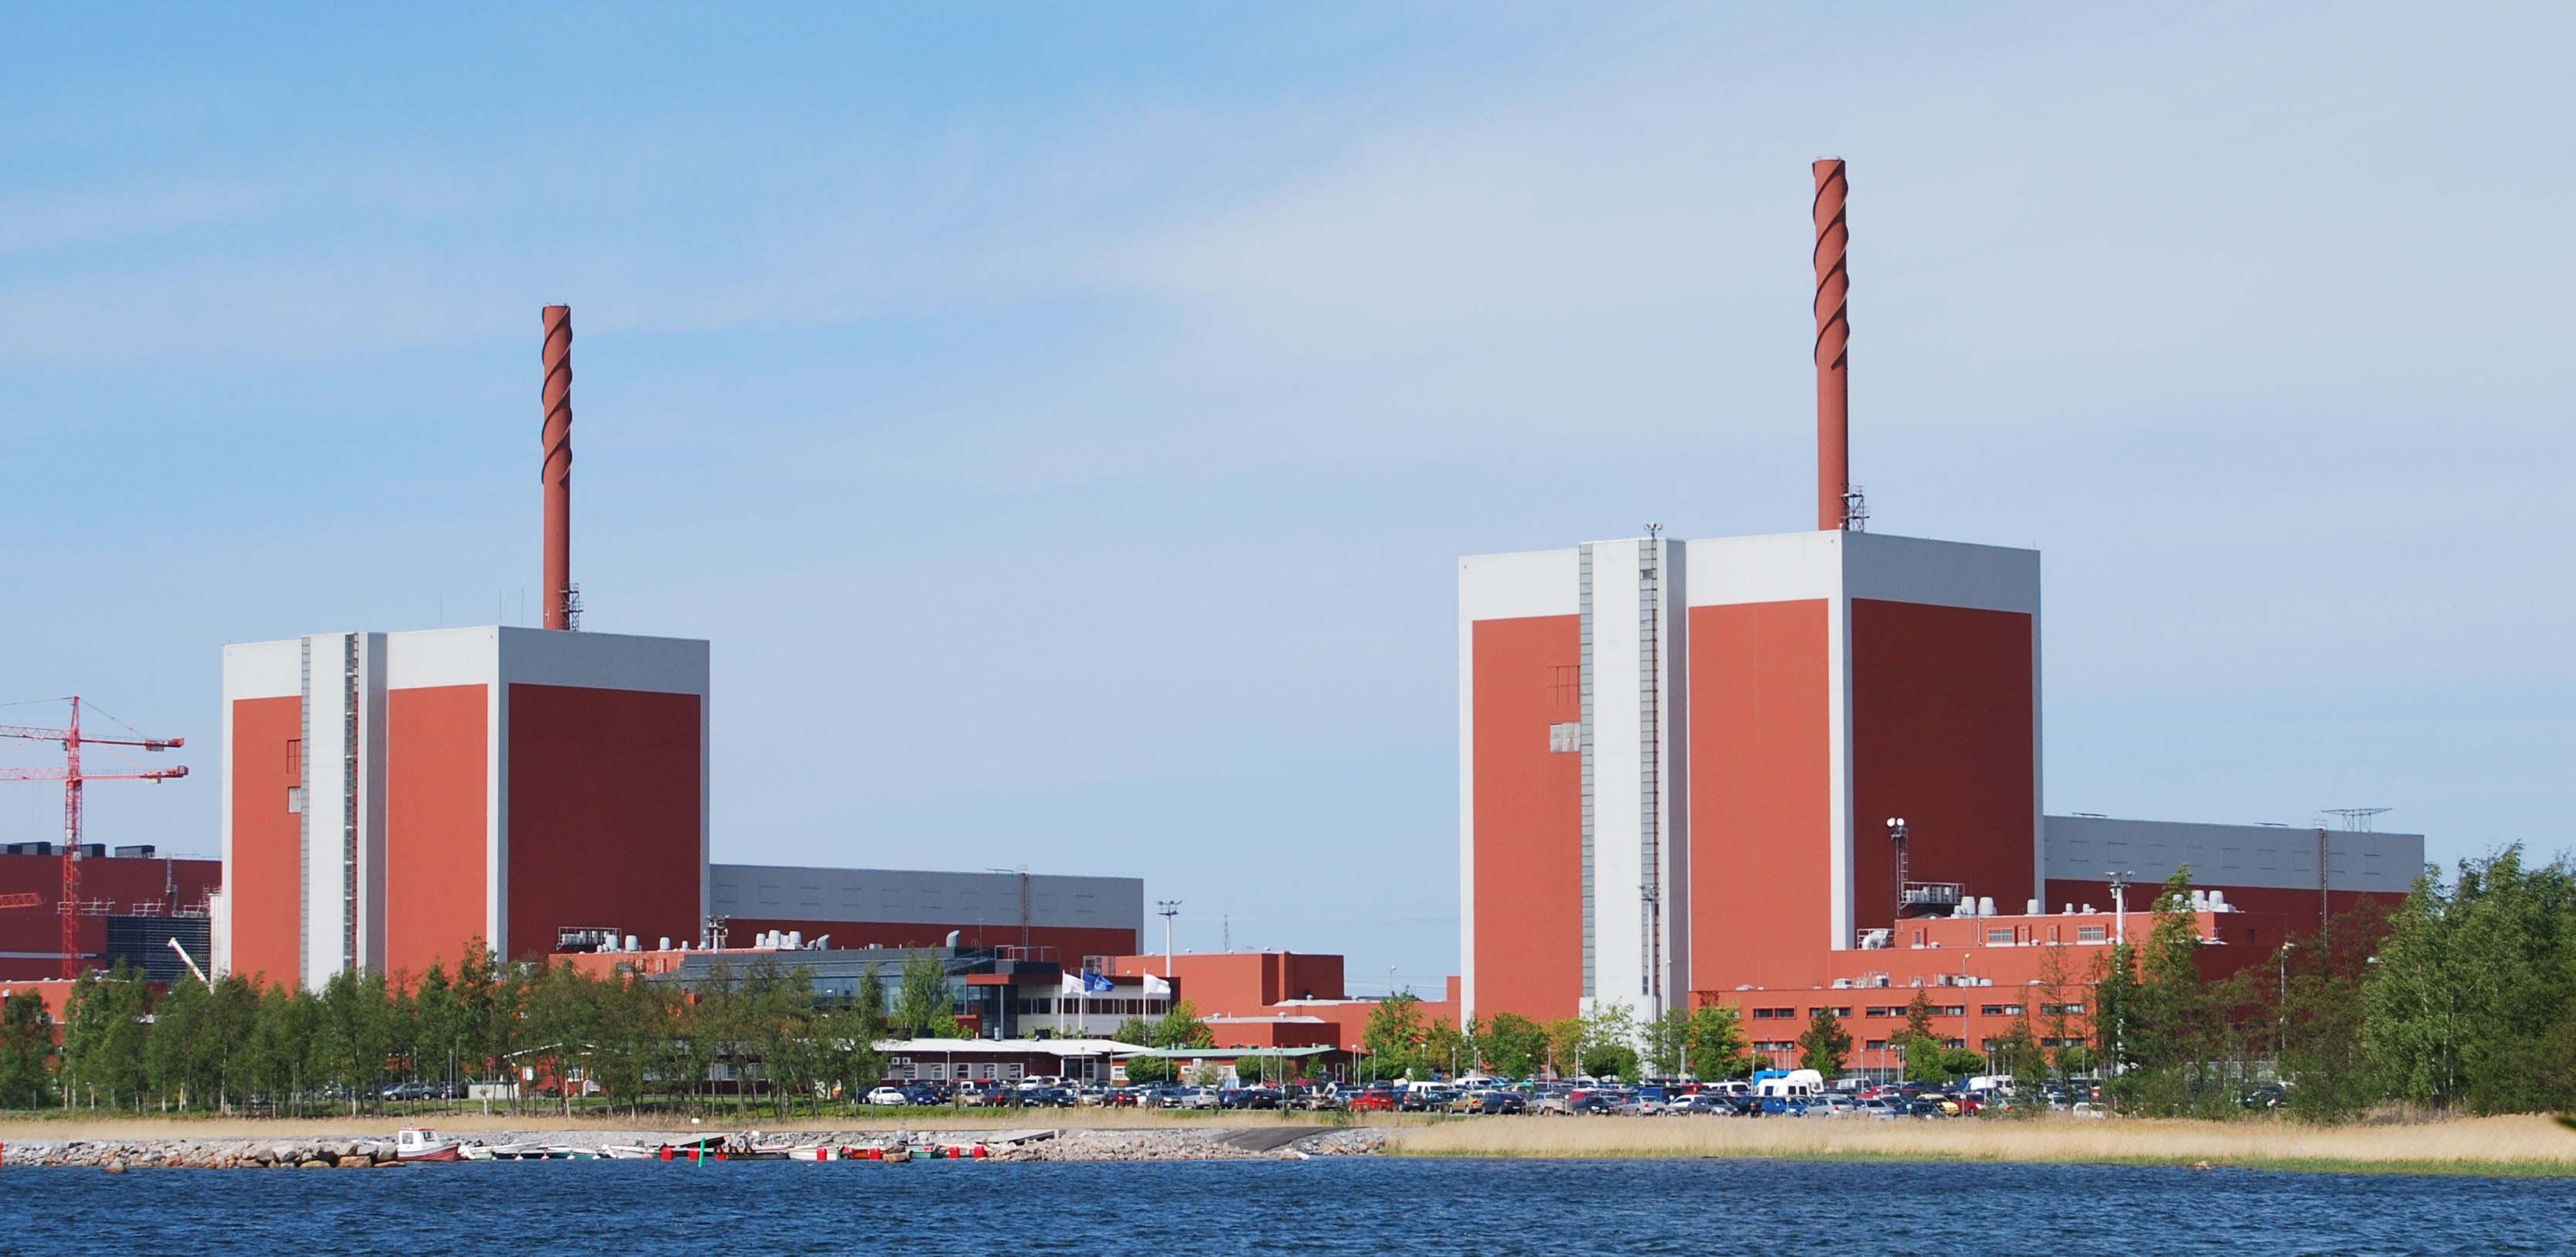 Elektrownia jądrowa Olkiluoto. Fot. Wikimedia Commons